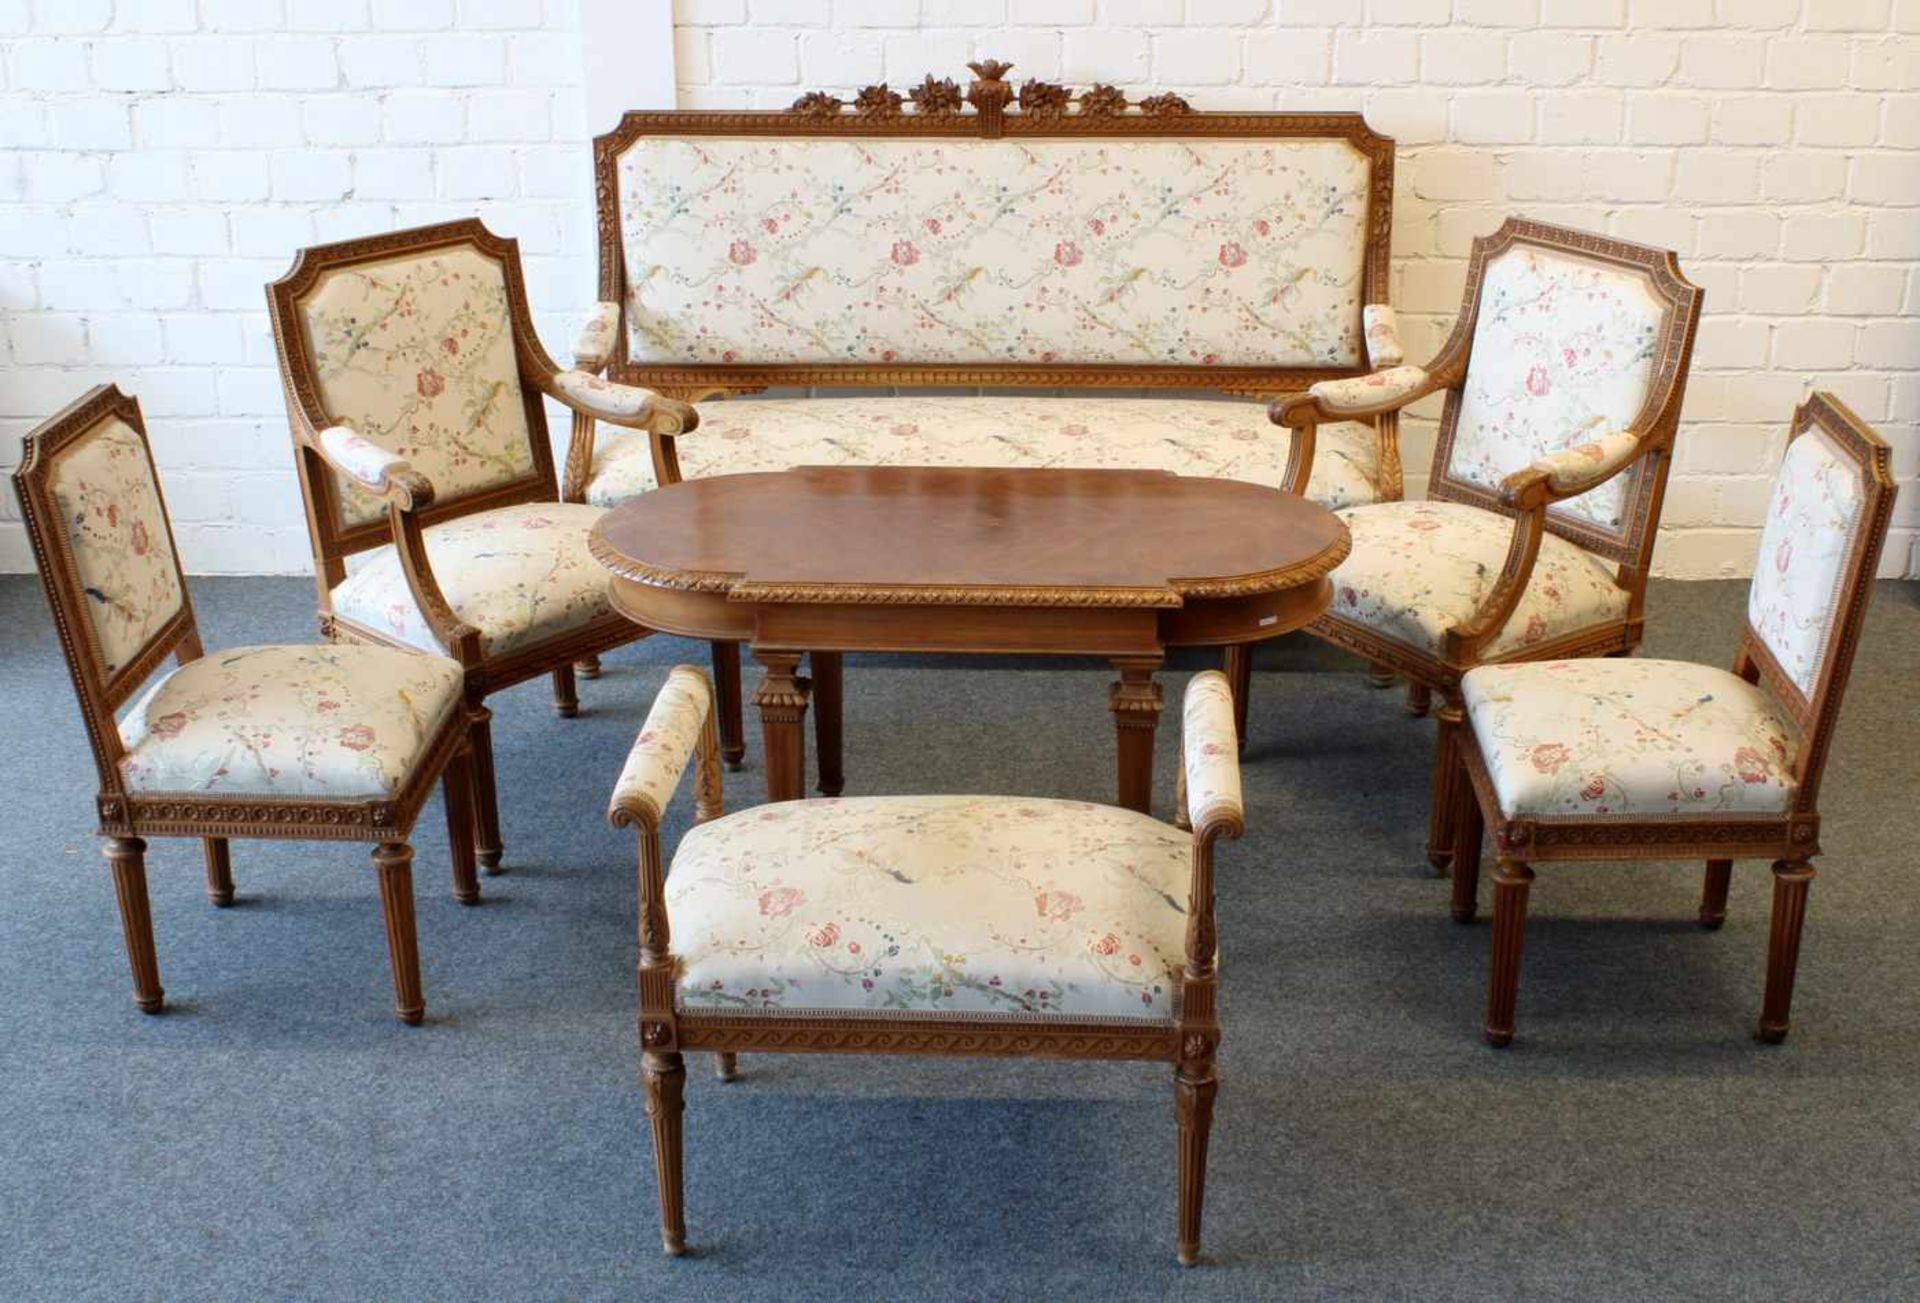 Salongarnitur, Louis Seize-Stil, Ende 19. Jh., Nussbaum: Bank, 174 cm breit, 2 Sessel, 2 Stühle, - Image 2 of 2